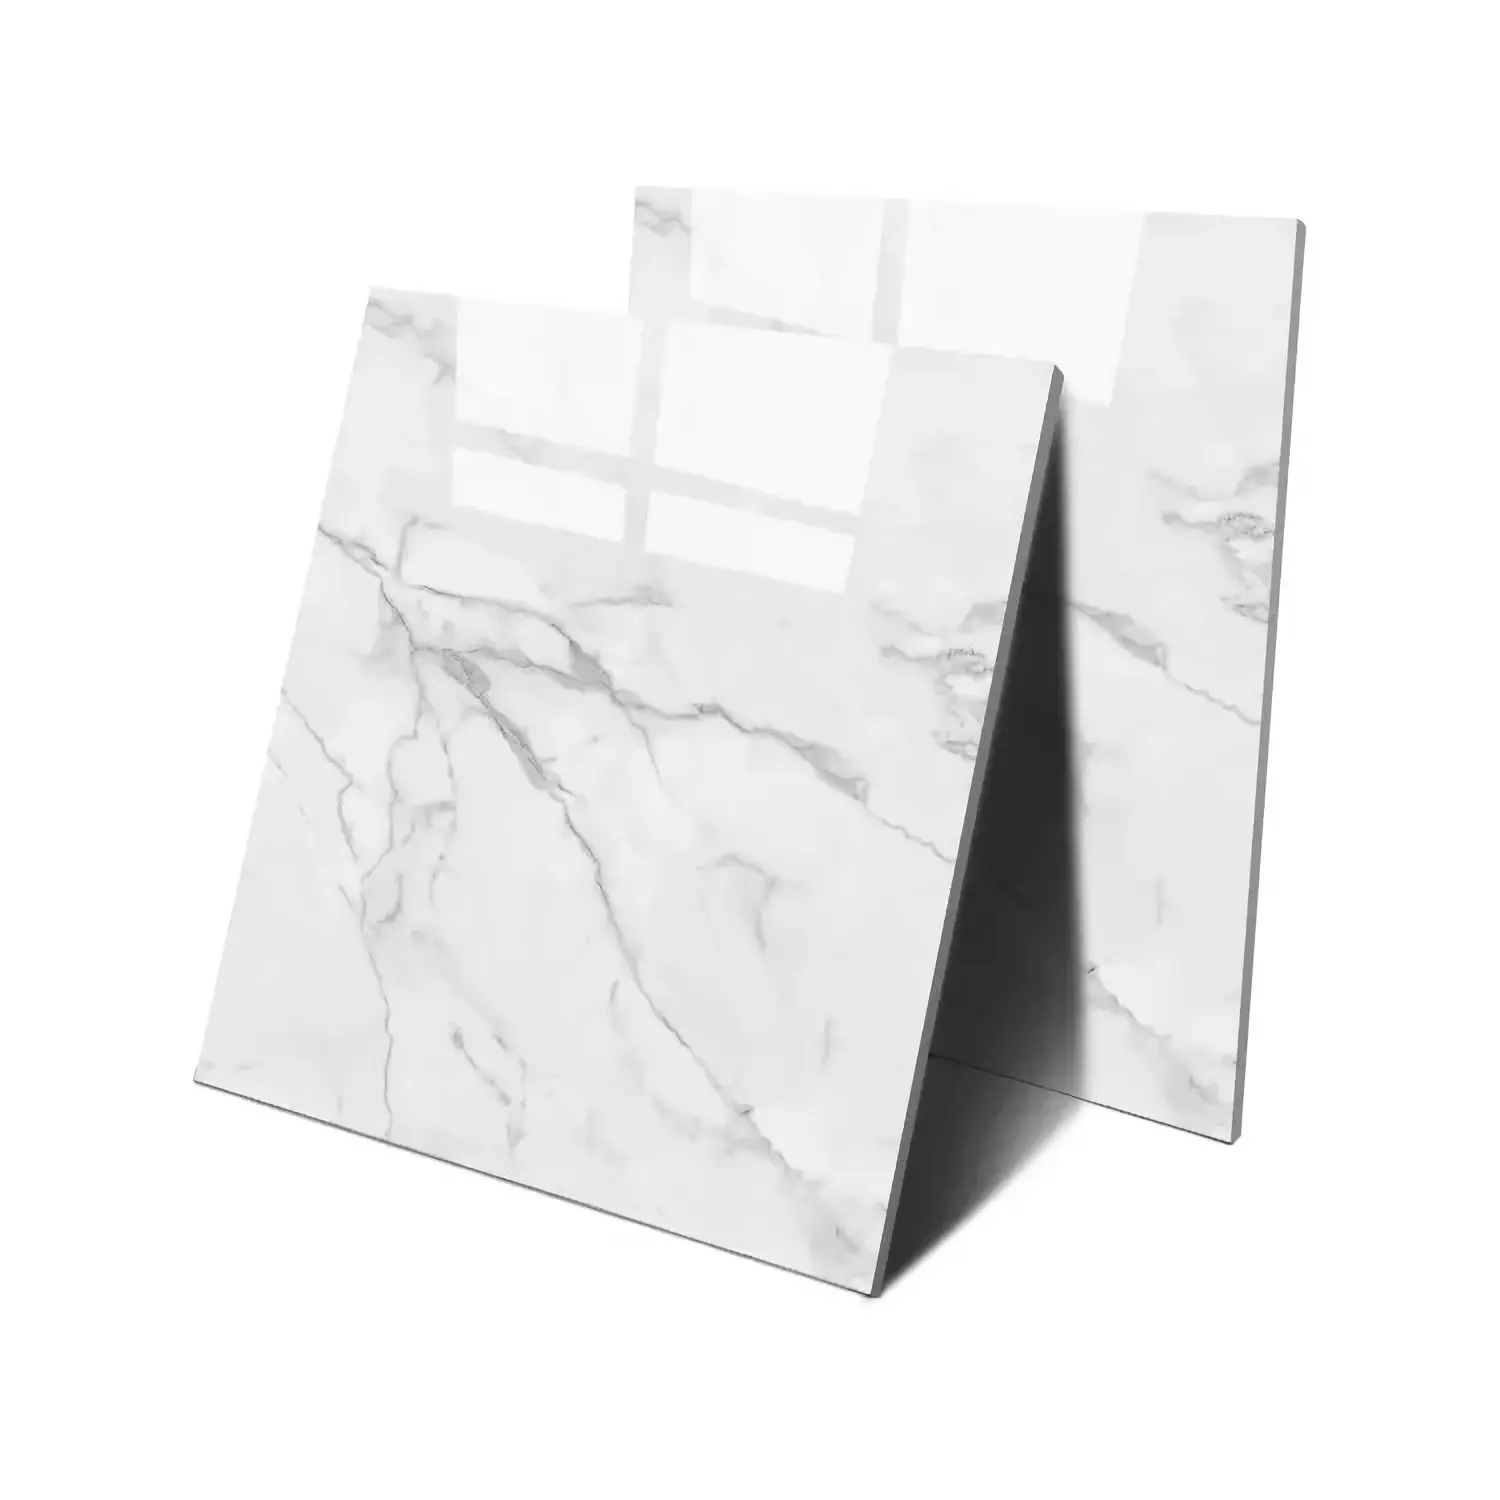 Mármol Marmi Carrara Tamaño 60*120 cm 600*1200mm indio Carrara mármol blanco imágenes piedra Natural Bianco Carrara cerámica azulejo Mat